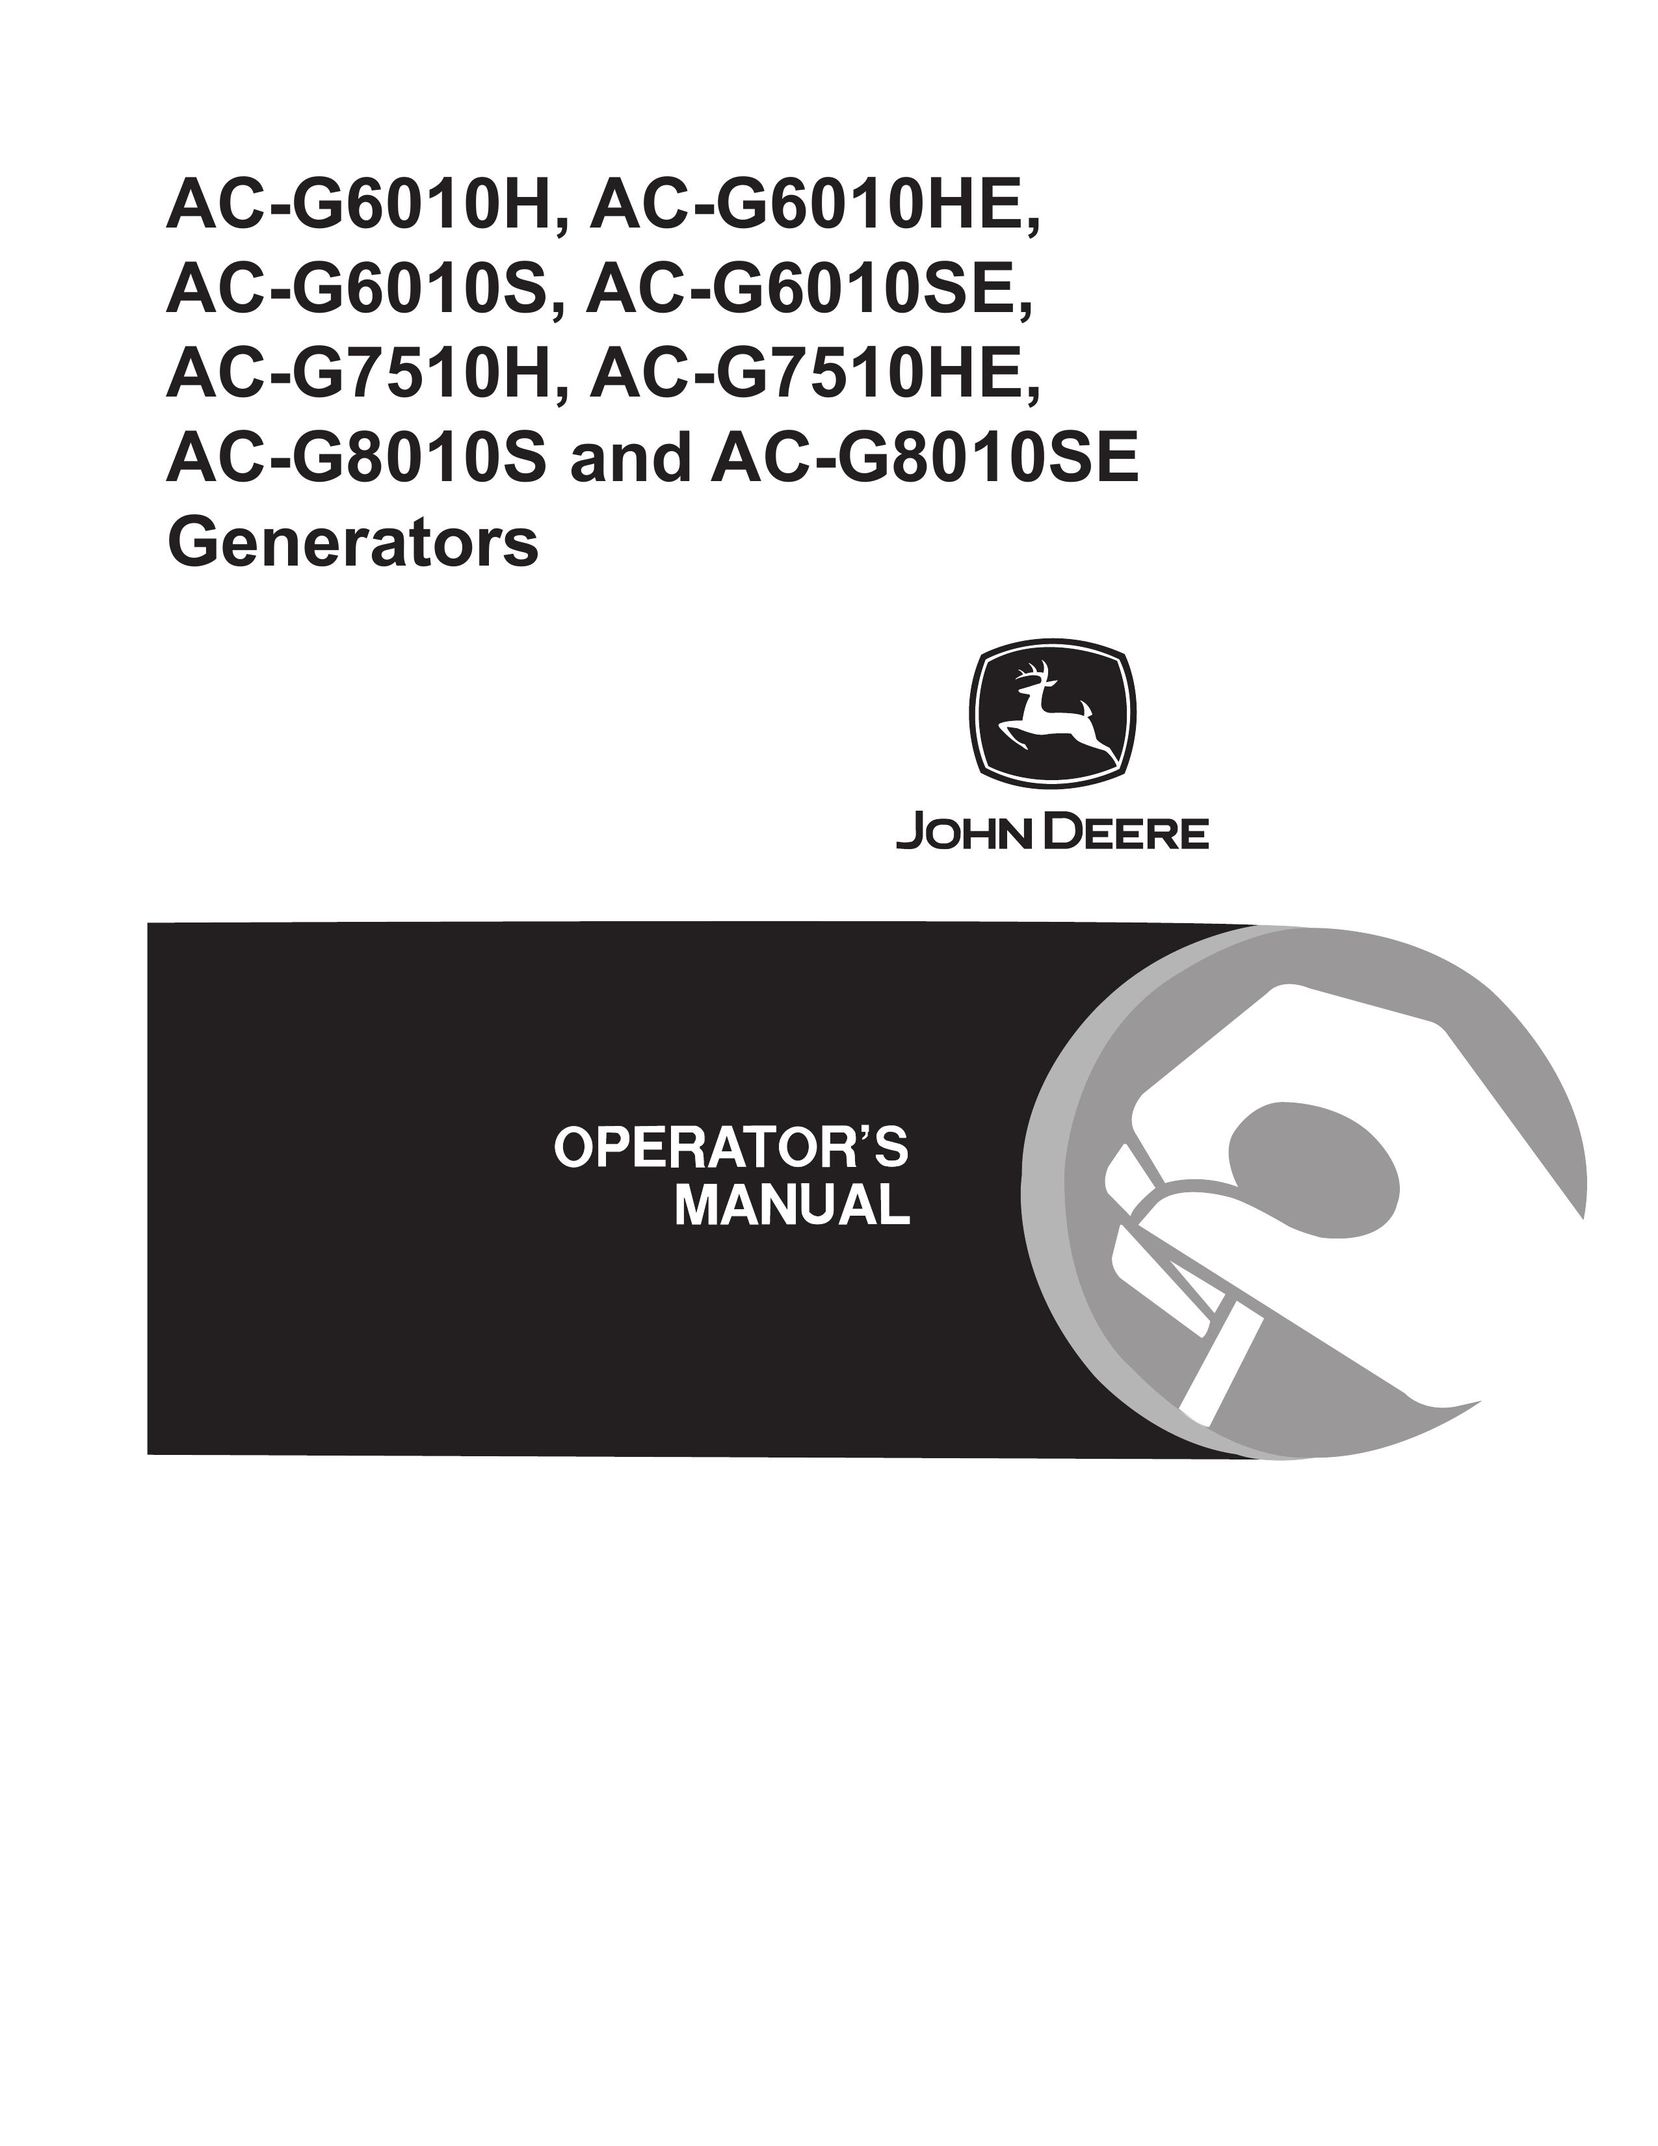 John Deere AC-G6010H Welding System User Manual